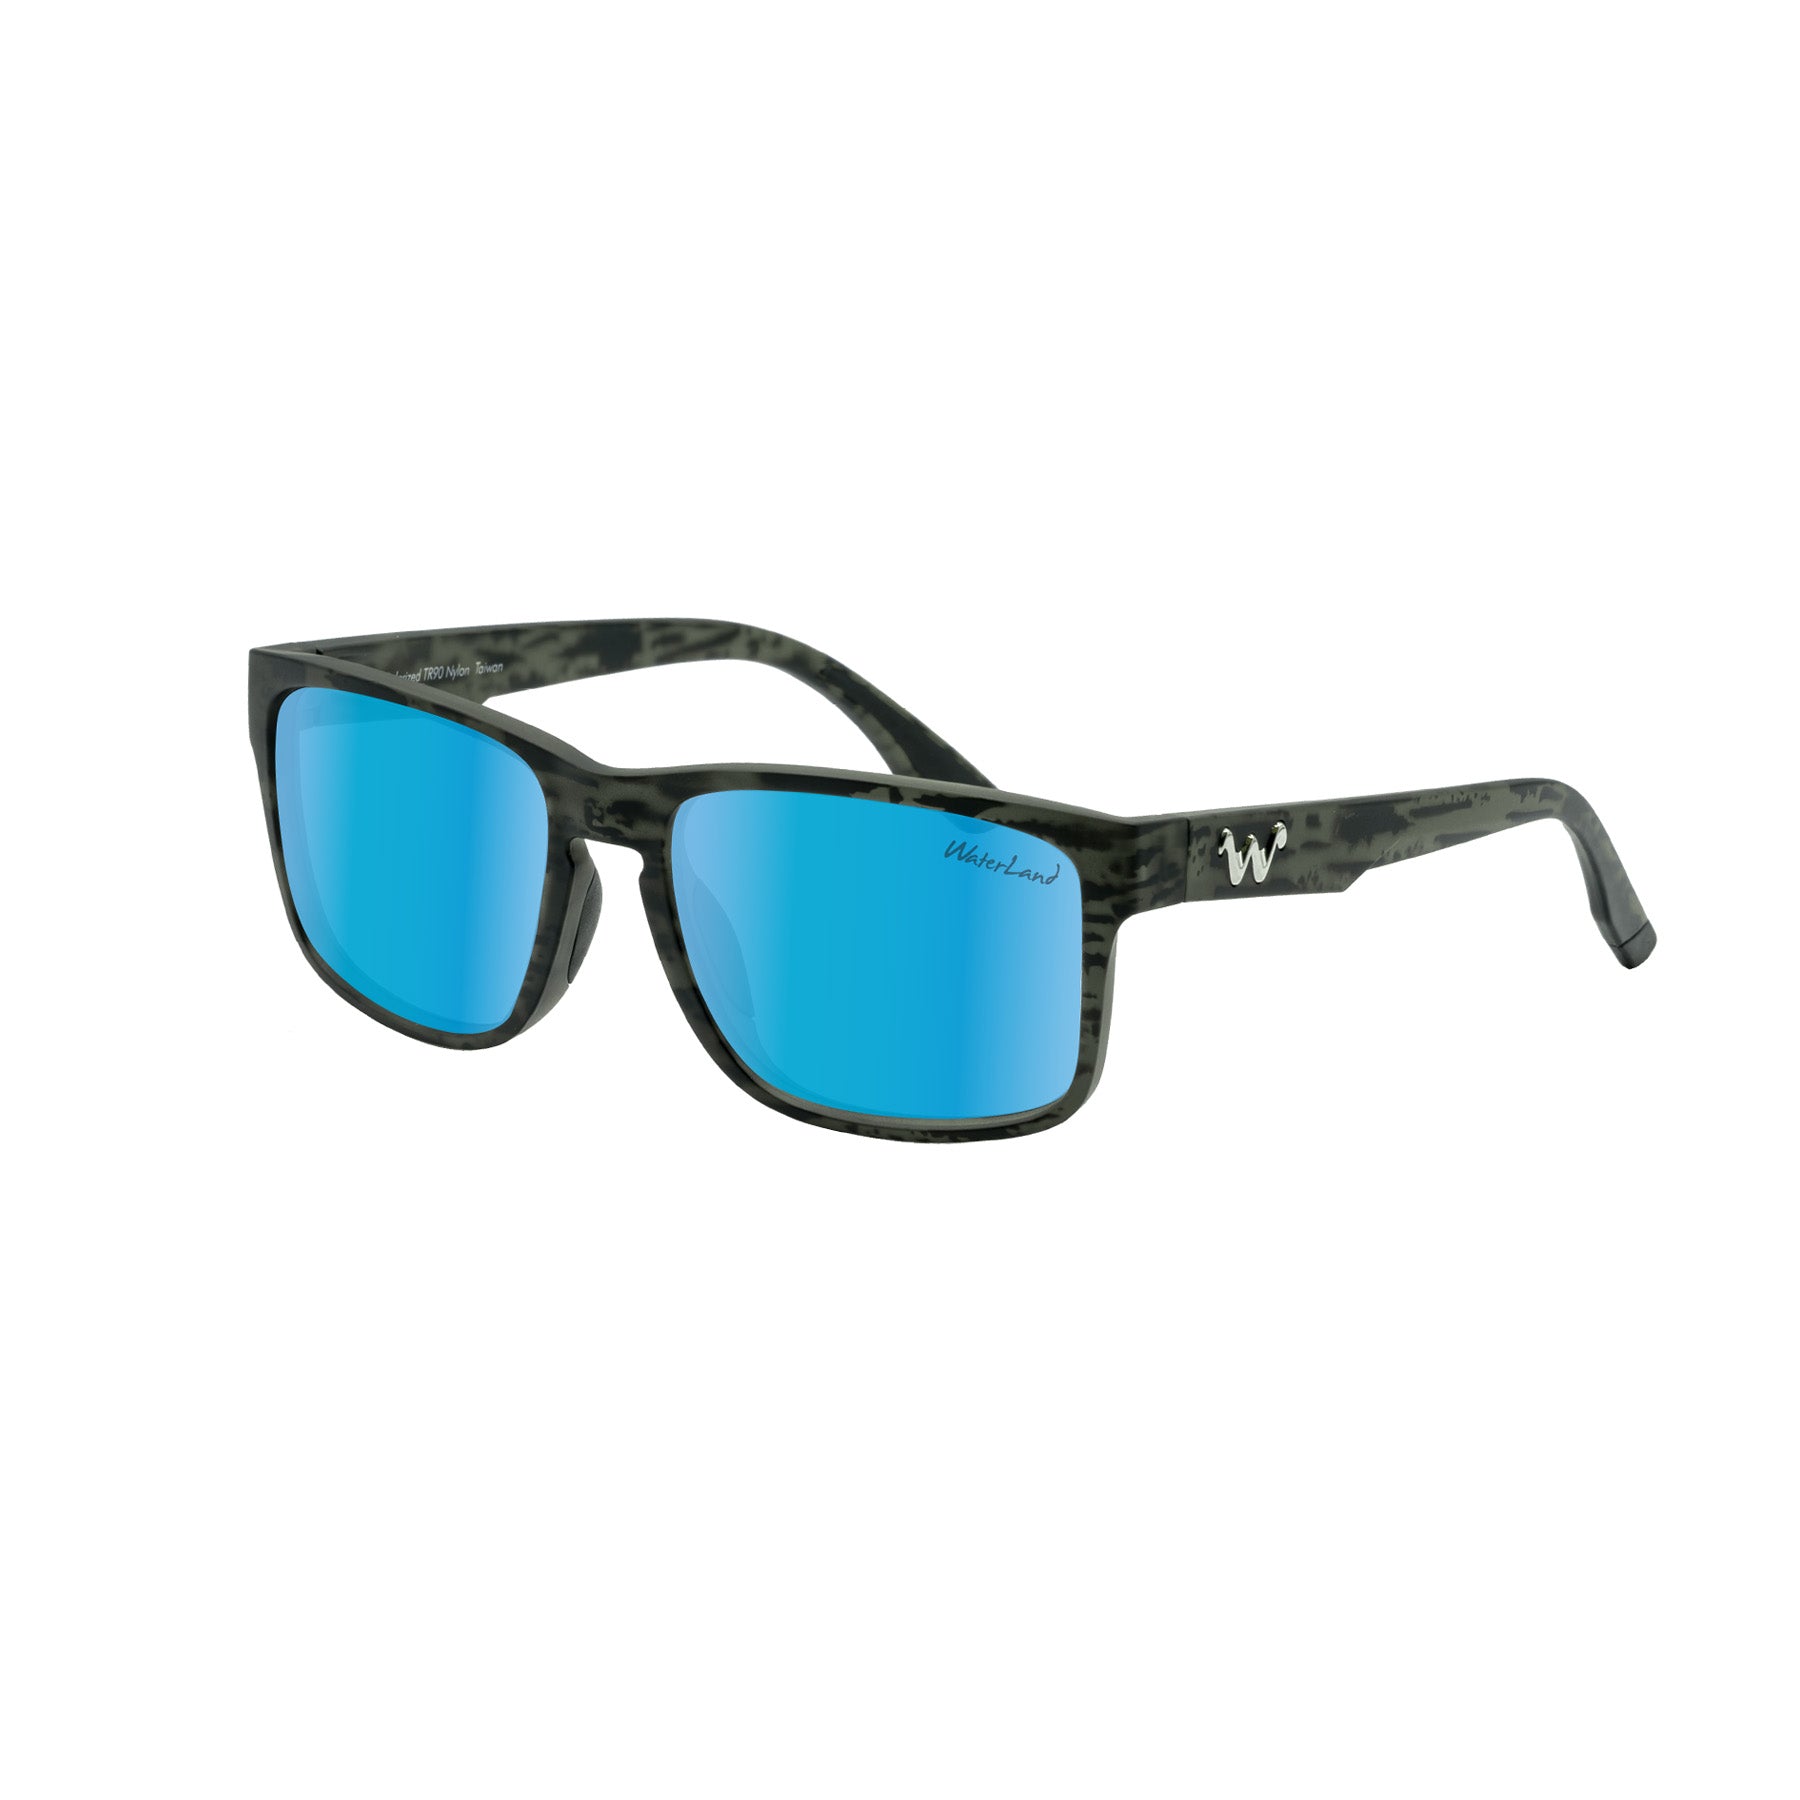 Waterland Sobro Sunglasses Black/Green Mirror